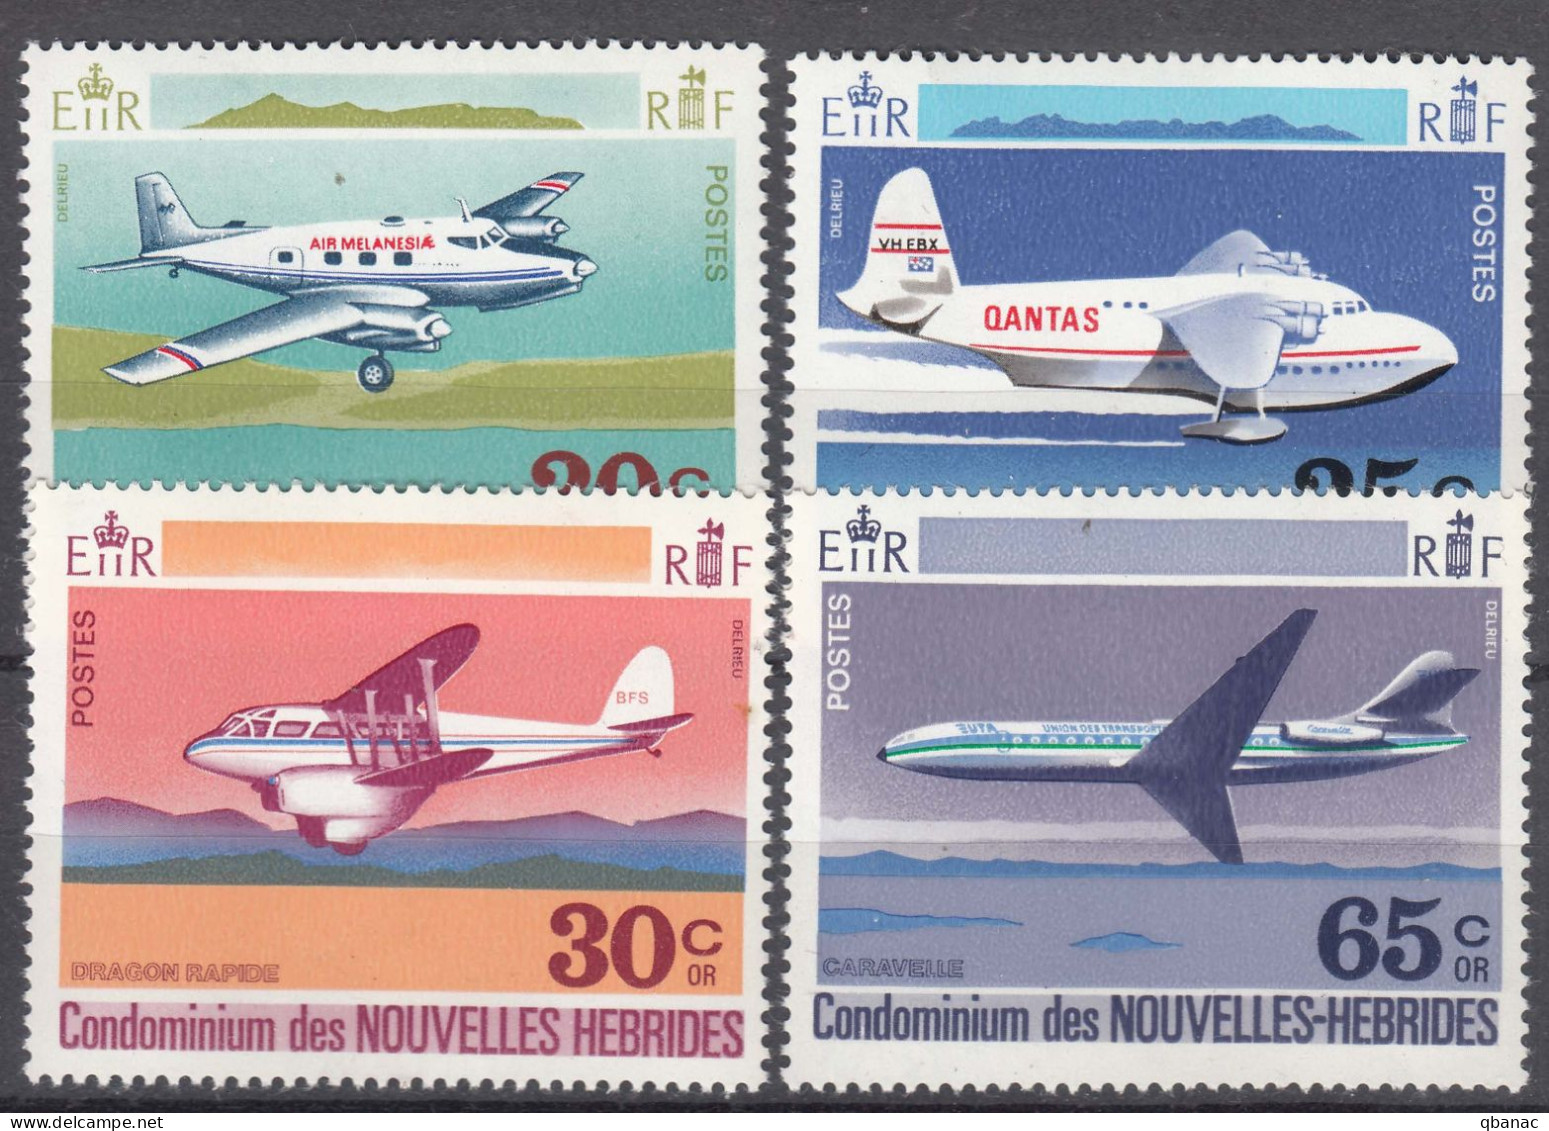 New Hebrides Nouvelles Hebrides French Legend 1972 Airplanes Mi#319-322 Mint Never Hinged (sans Charniere) - Ongebruikt